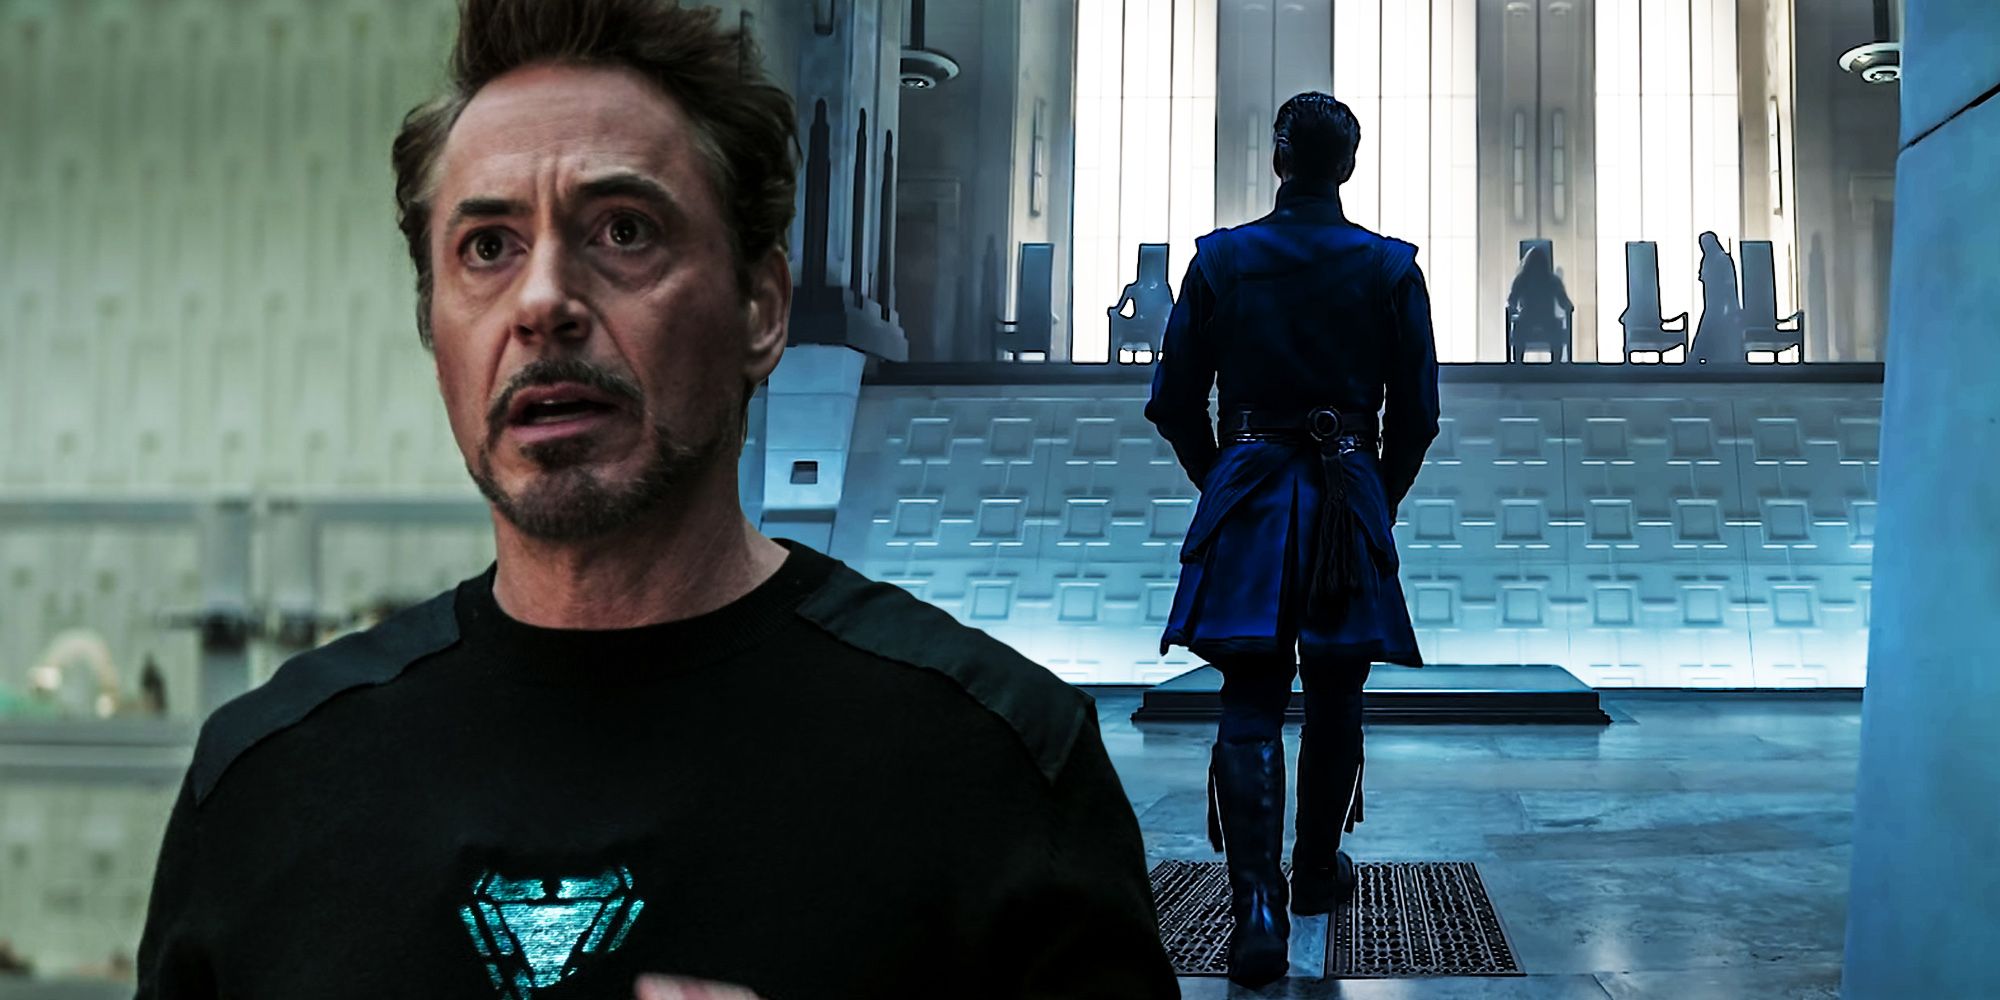 Avengers endgame explains why Tony stark iron man is not in the illuminati doctor strange 2